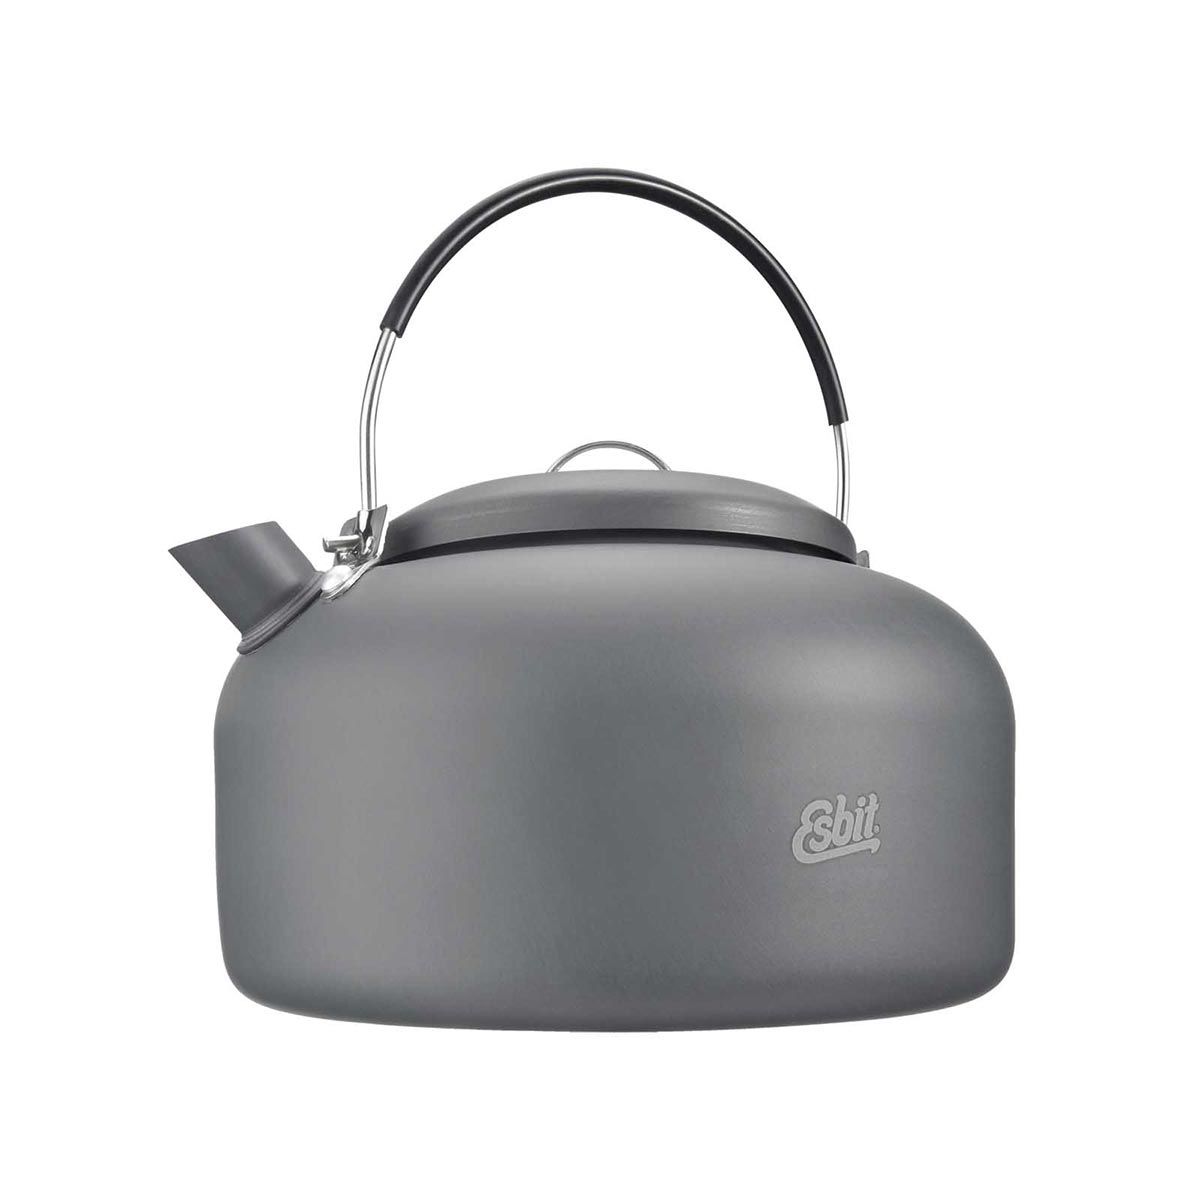 Esbit kettle - 1.4L